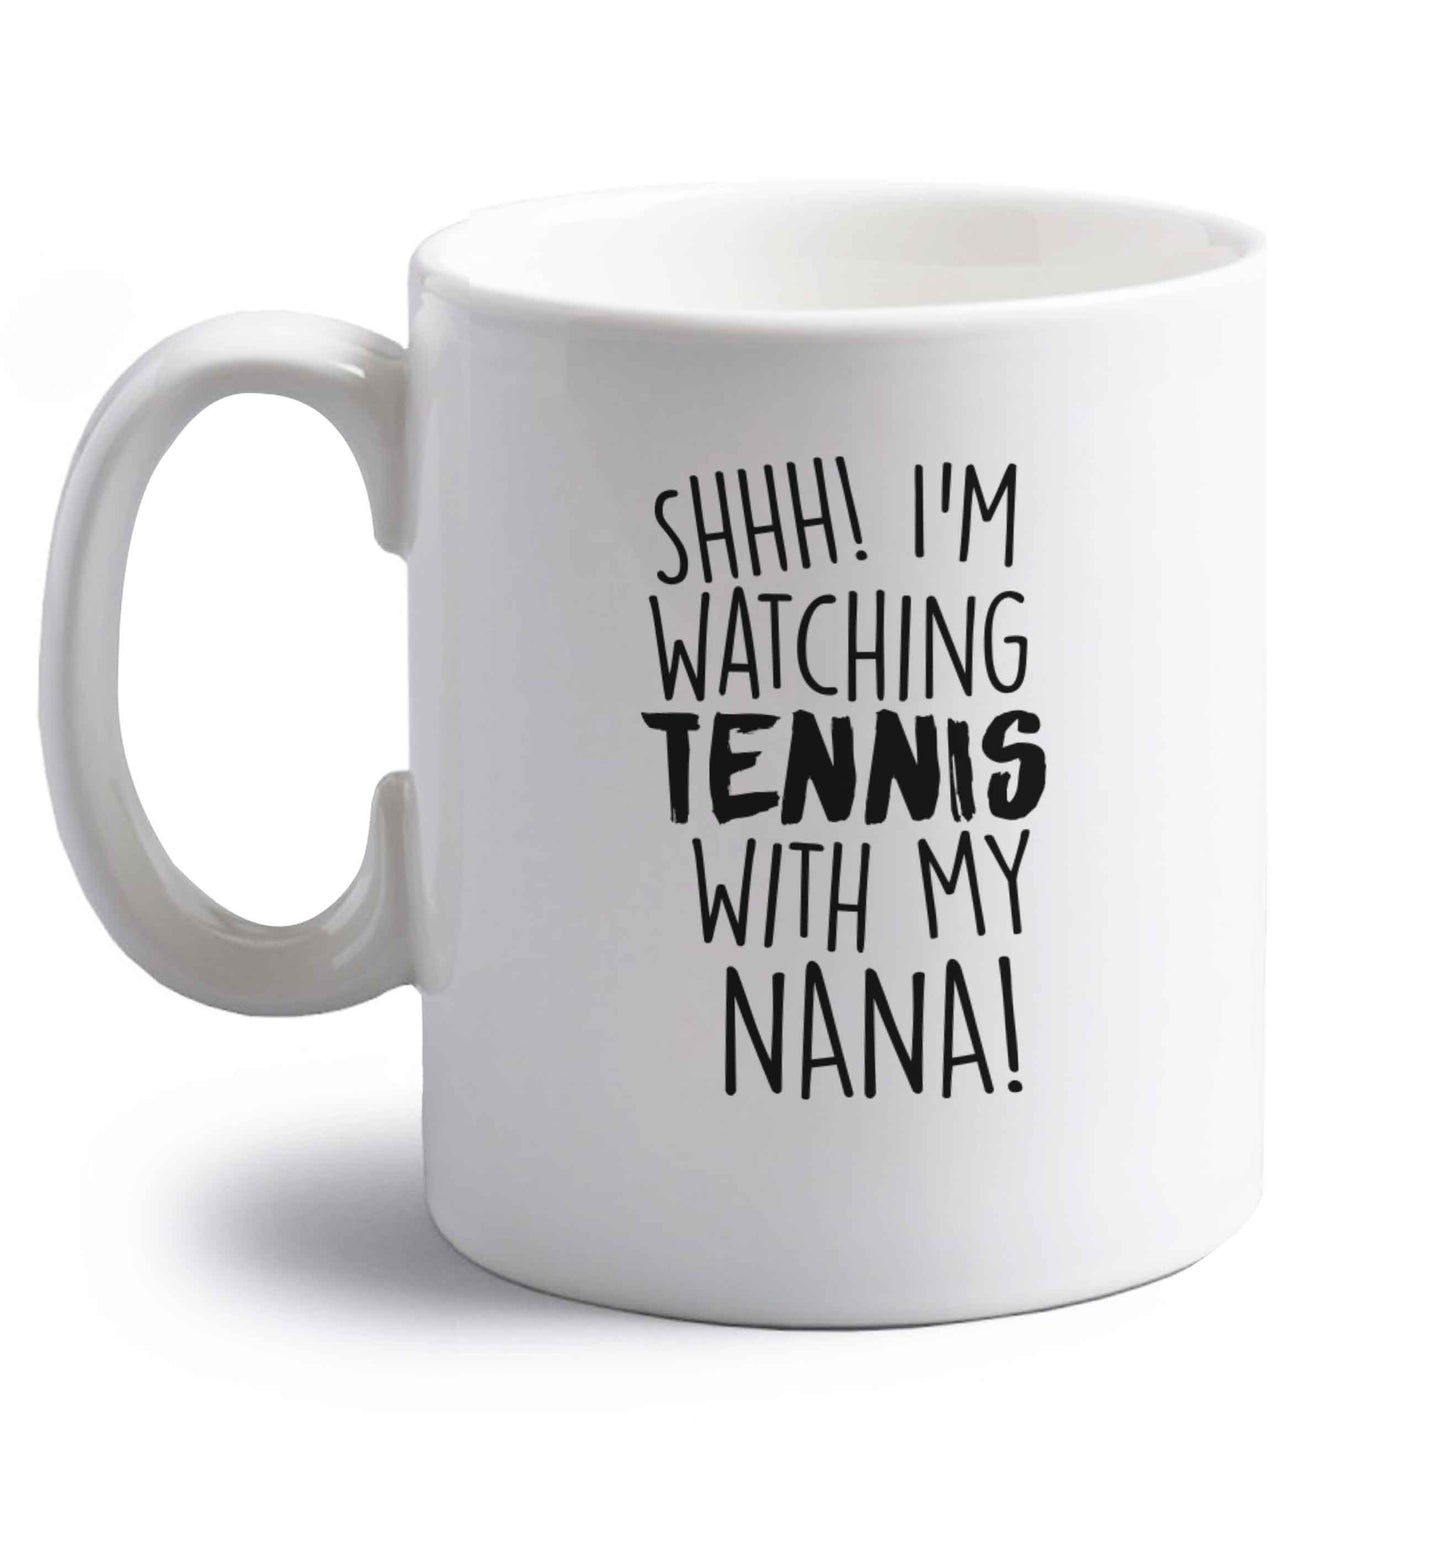 Shh! I'm watching tennis with my nana! right handed white ceramic mug 